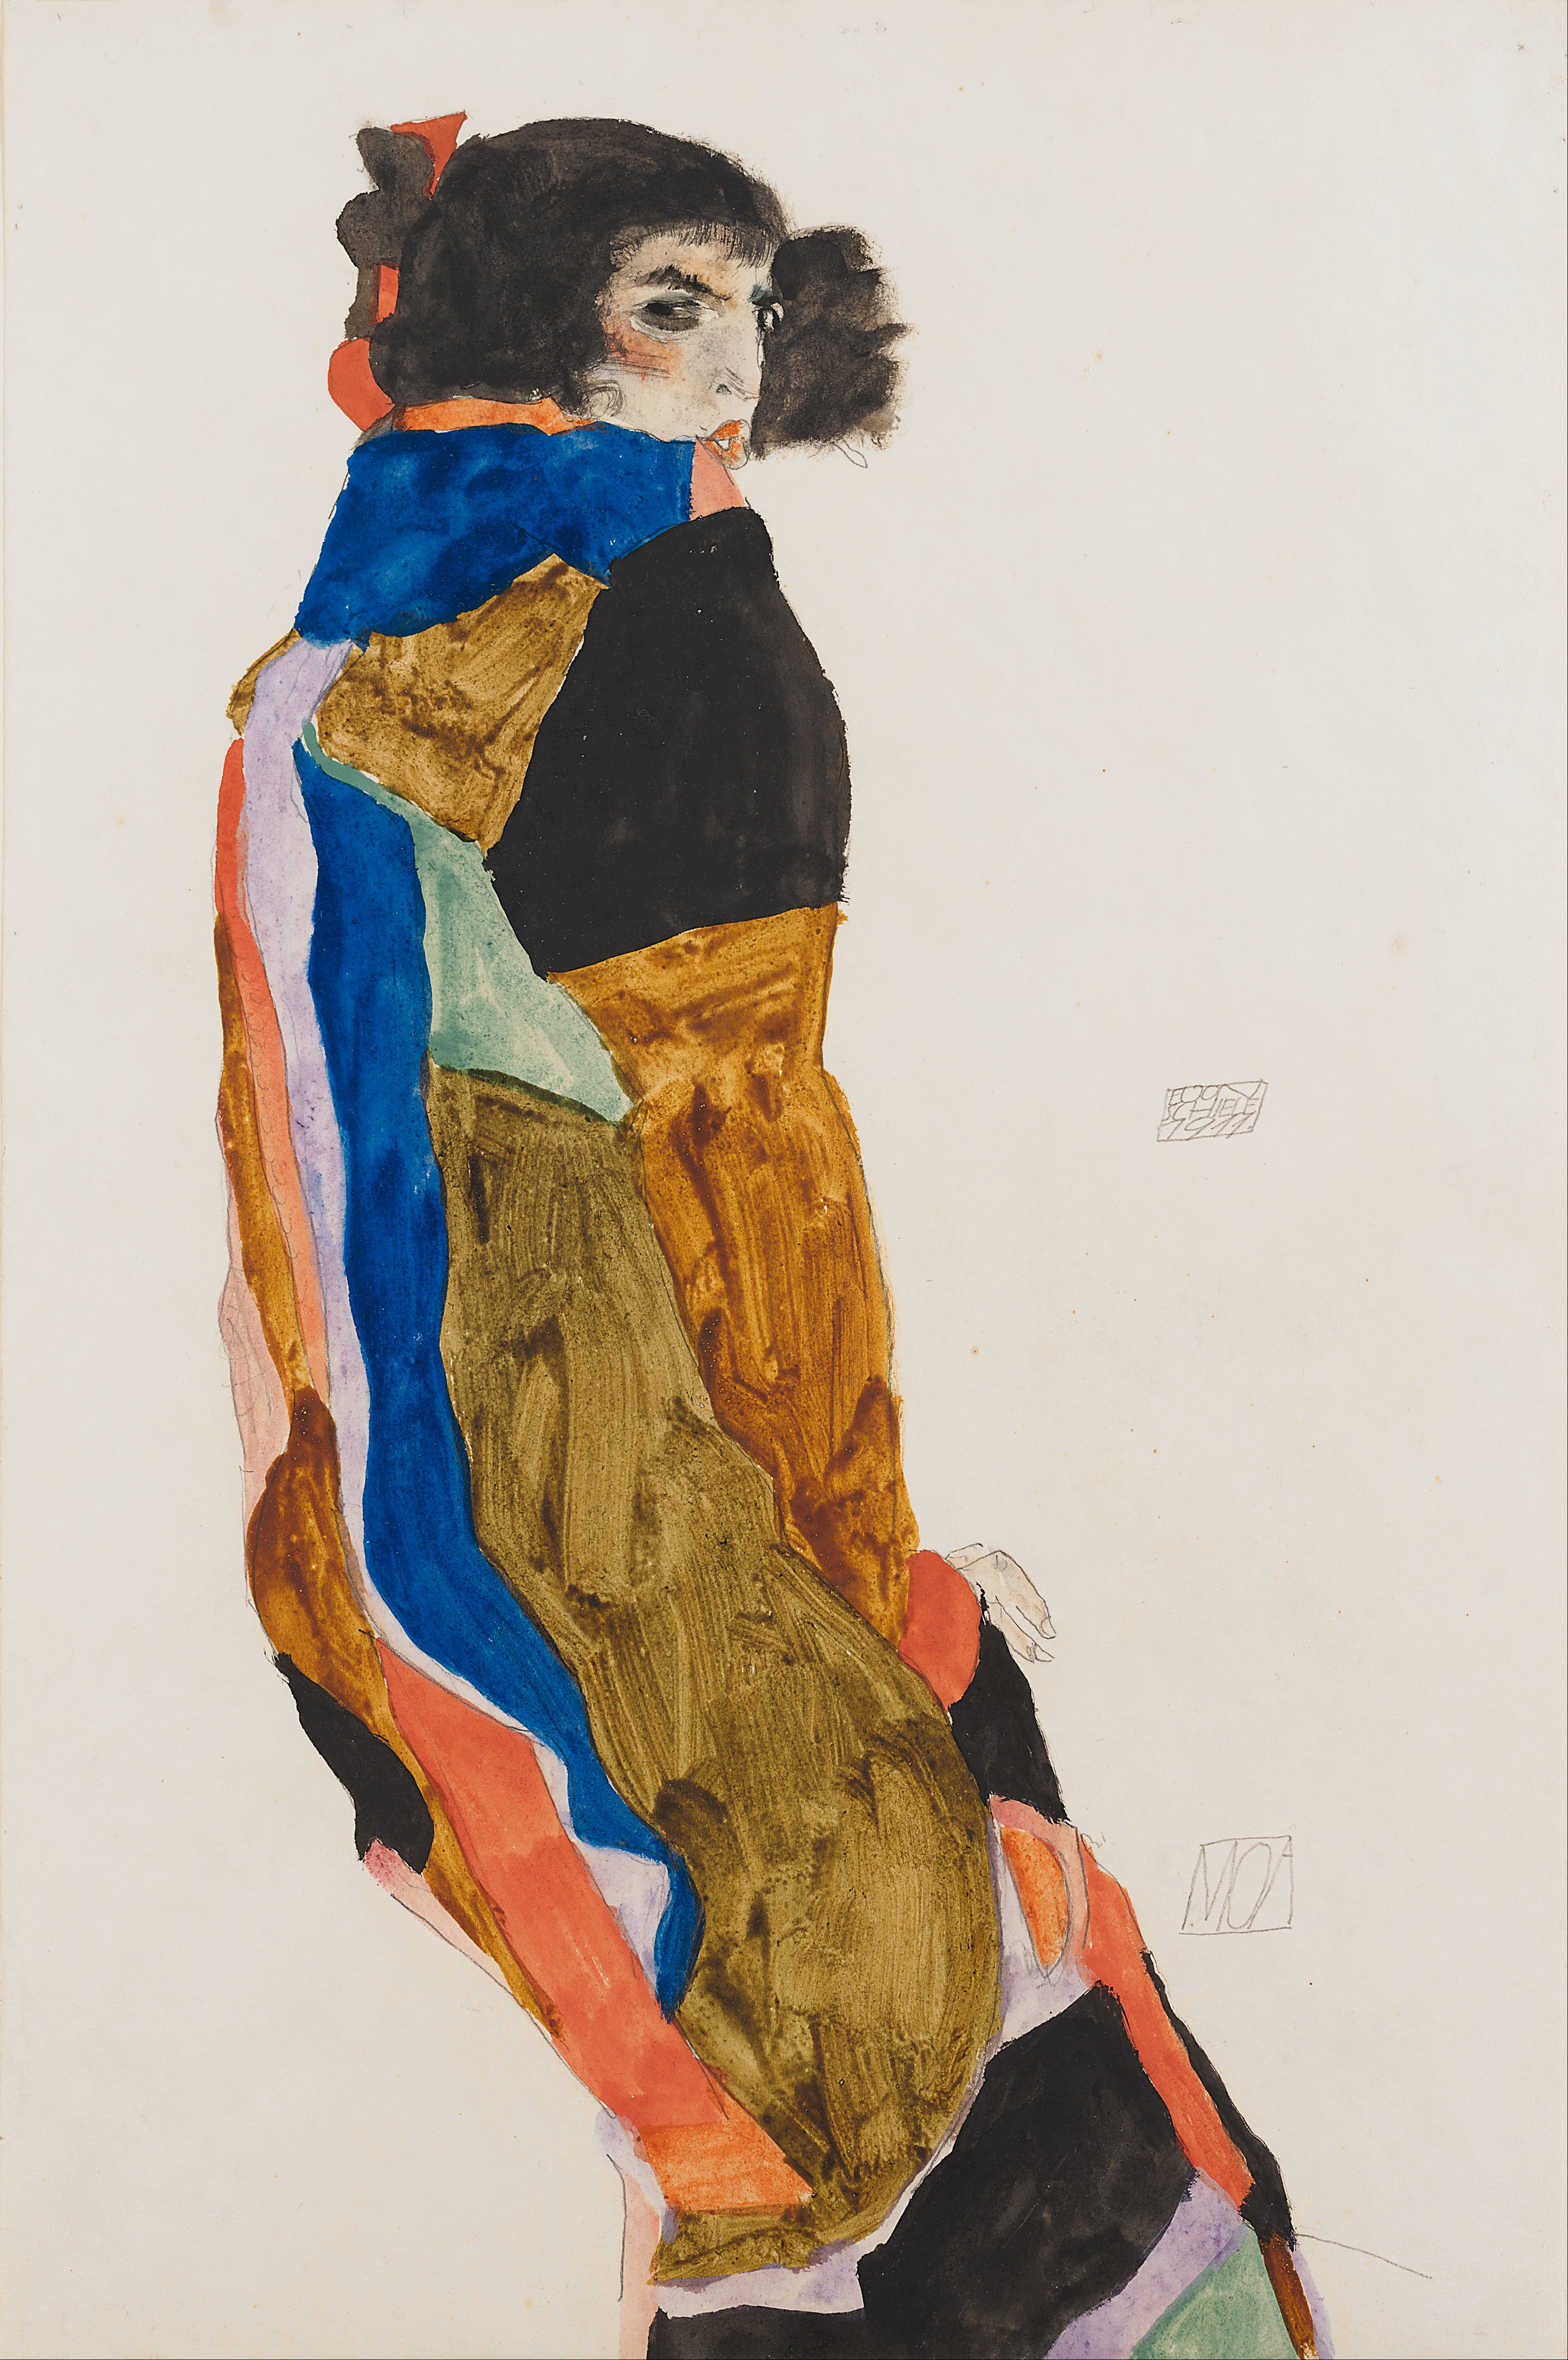 Moa by Egon Schiele - 1911 